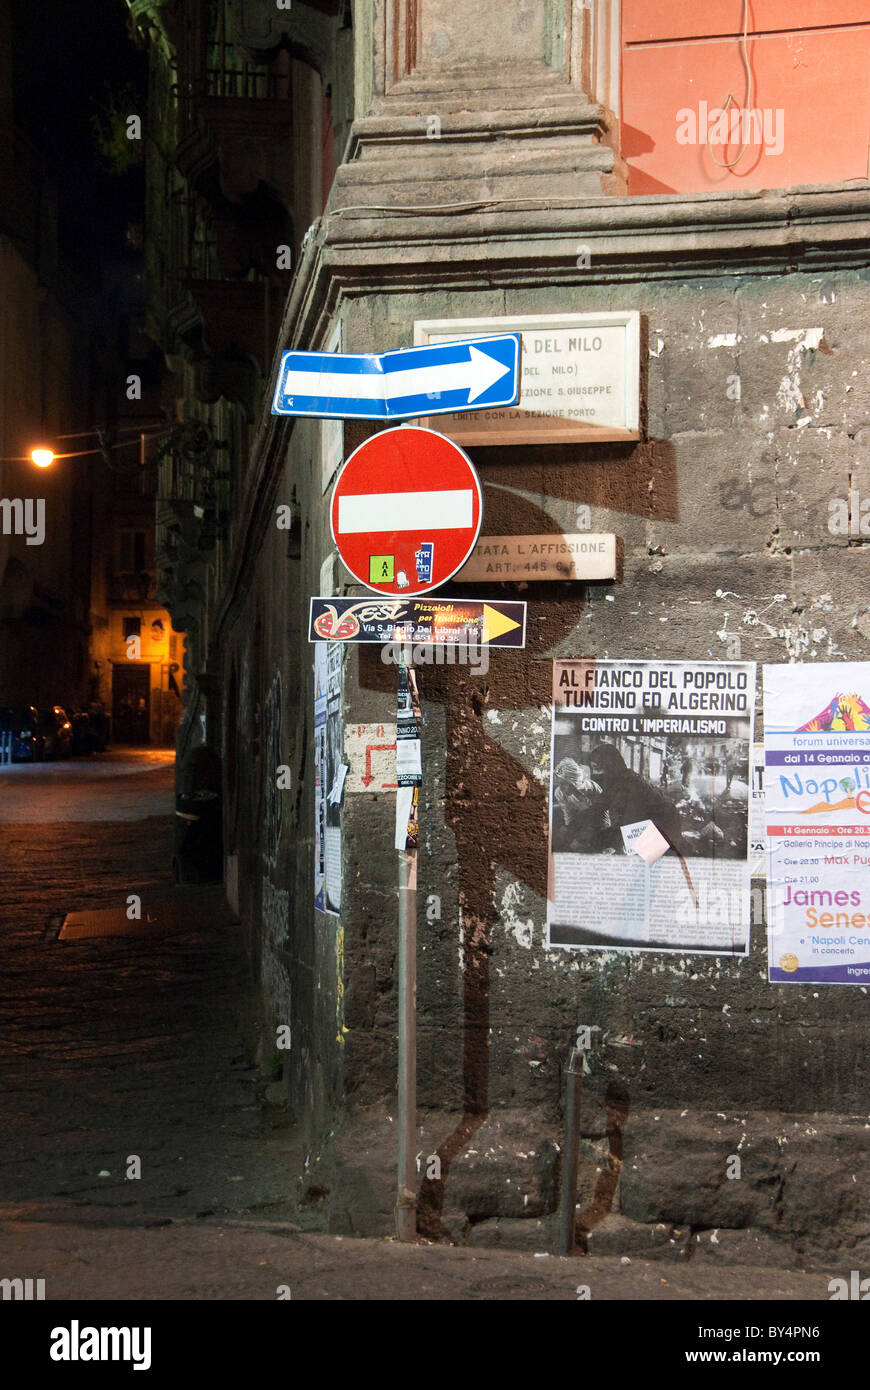 Street art and Graffiti in Naples, Italy Stock Photo